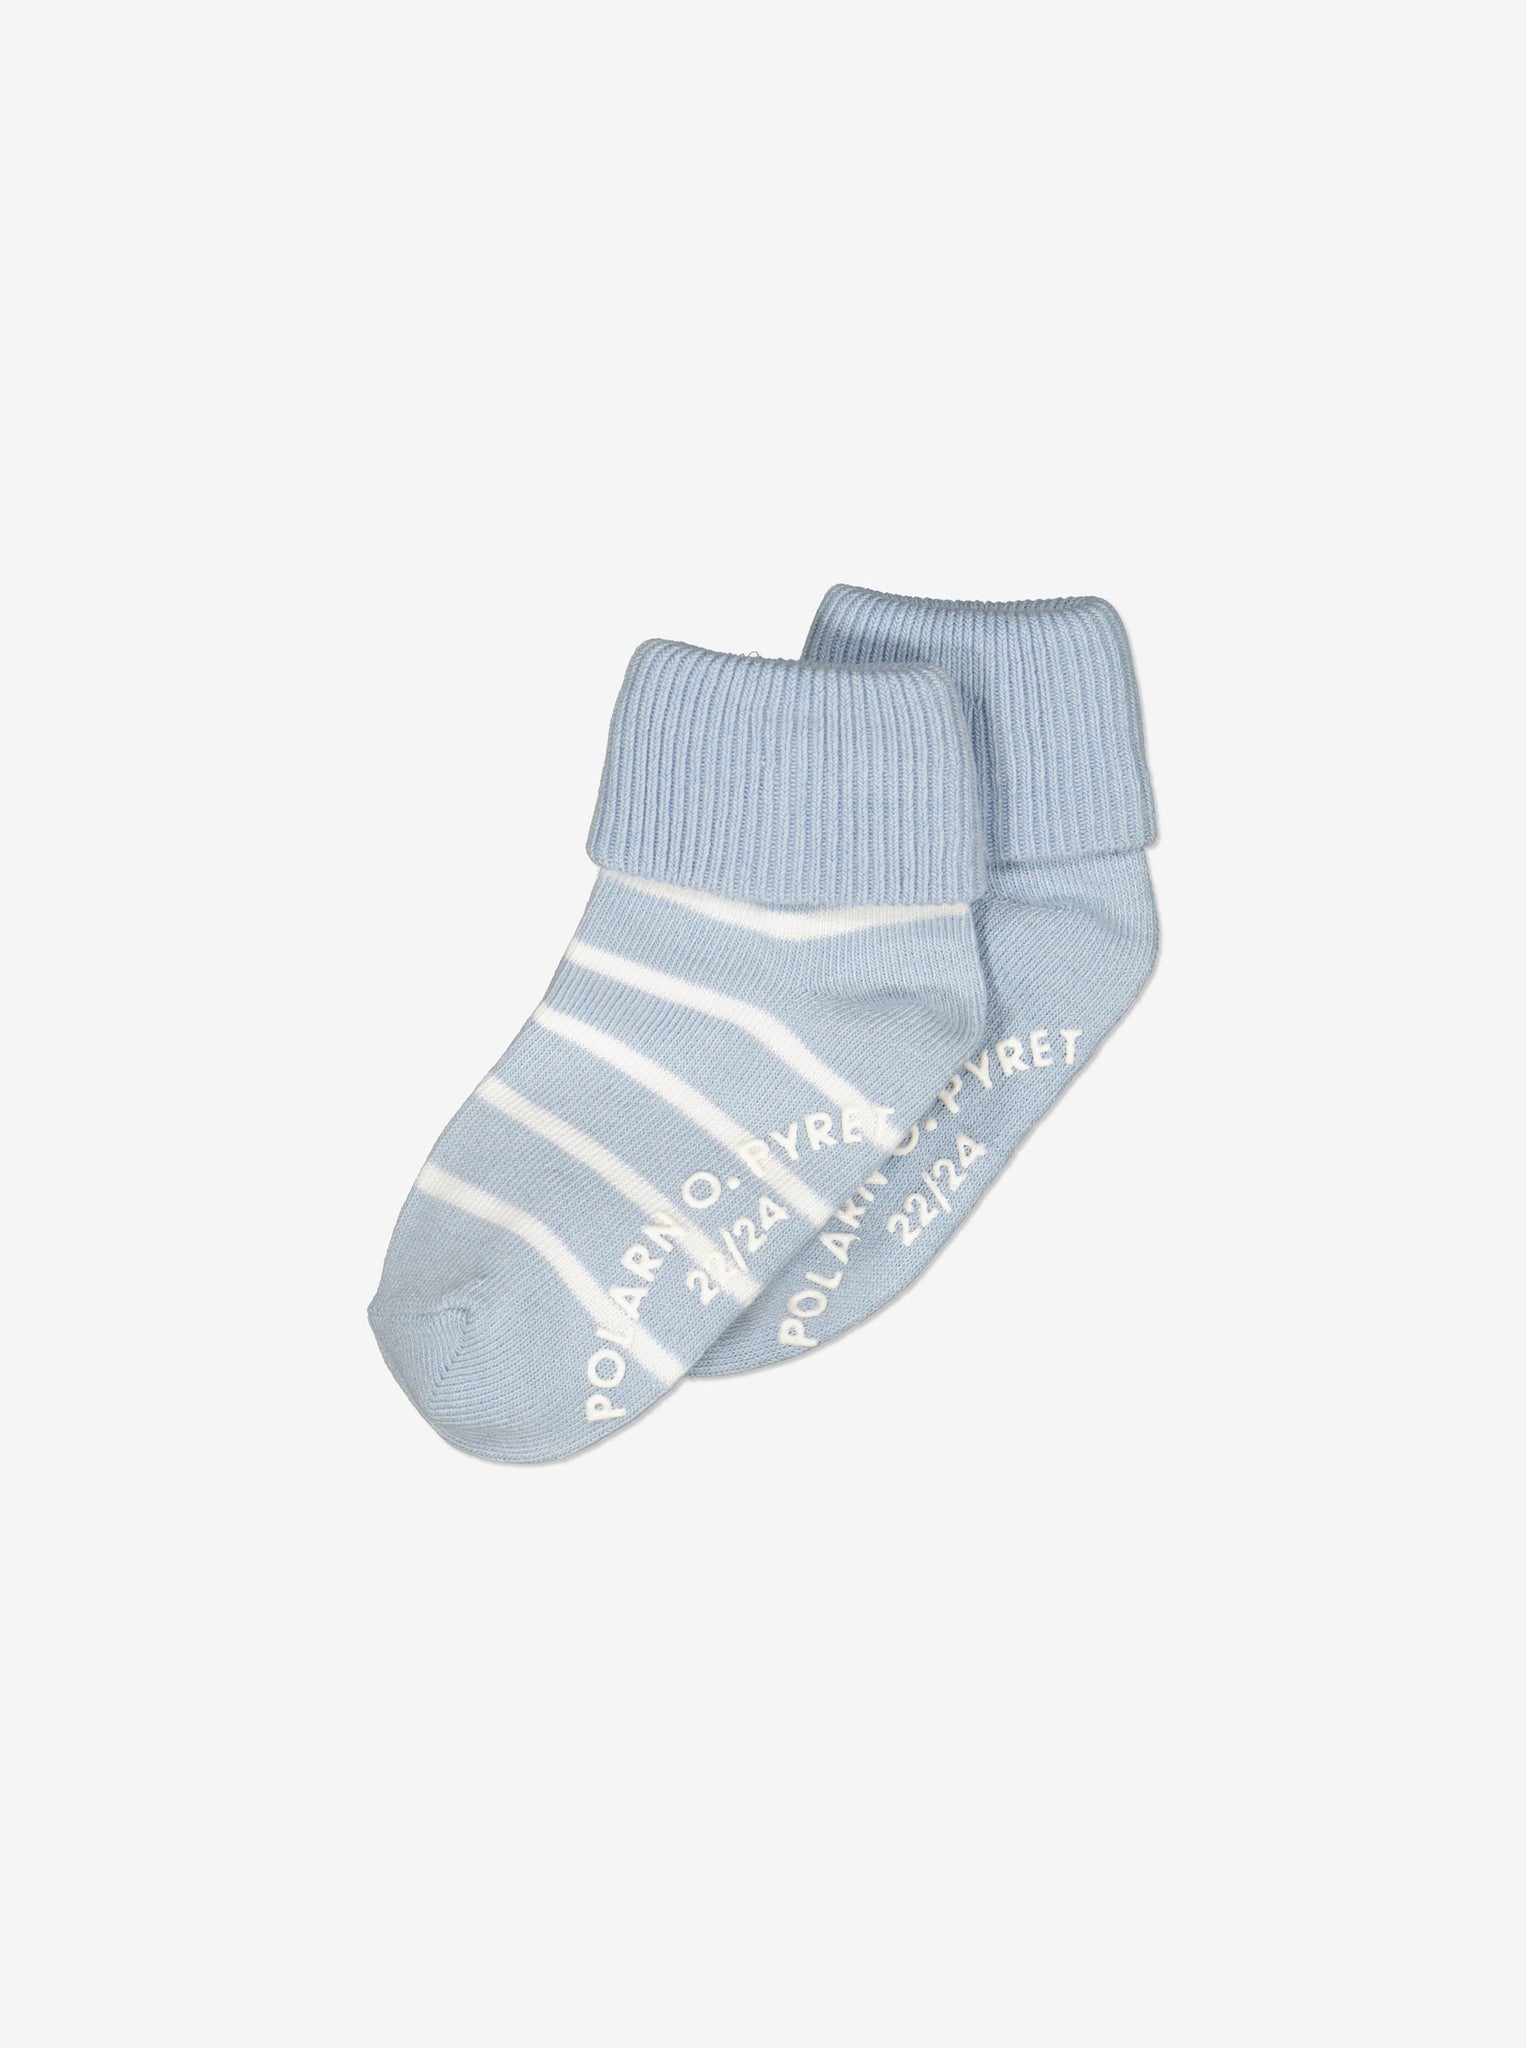  Blue Kids Antislip Socks from Polarn O. Pyret Kidswear. Made using environmentally friendly materials.